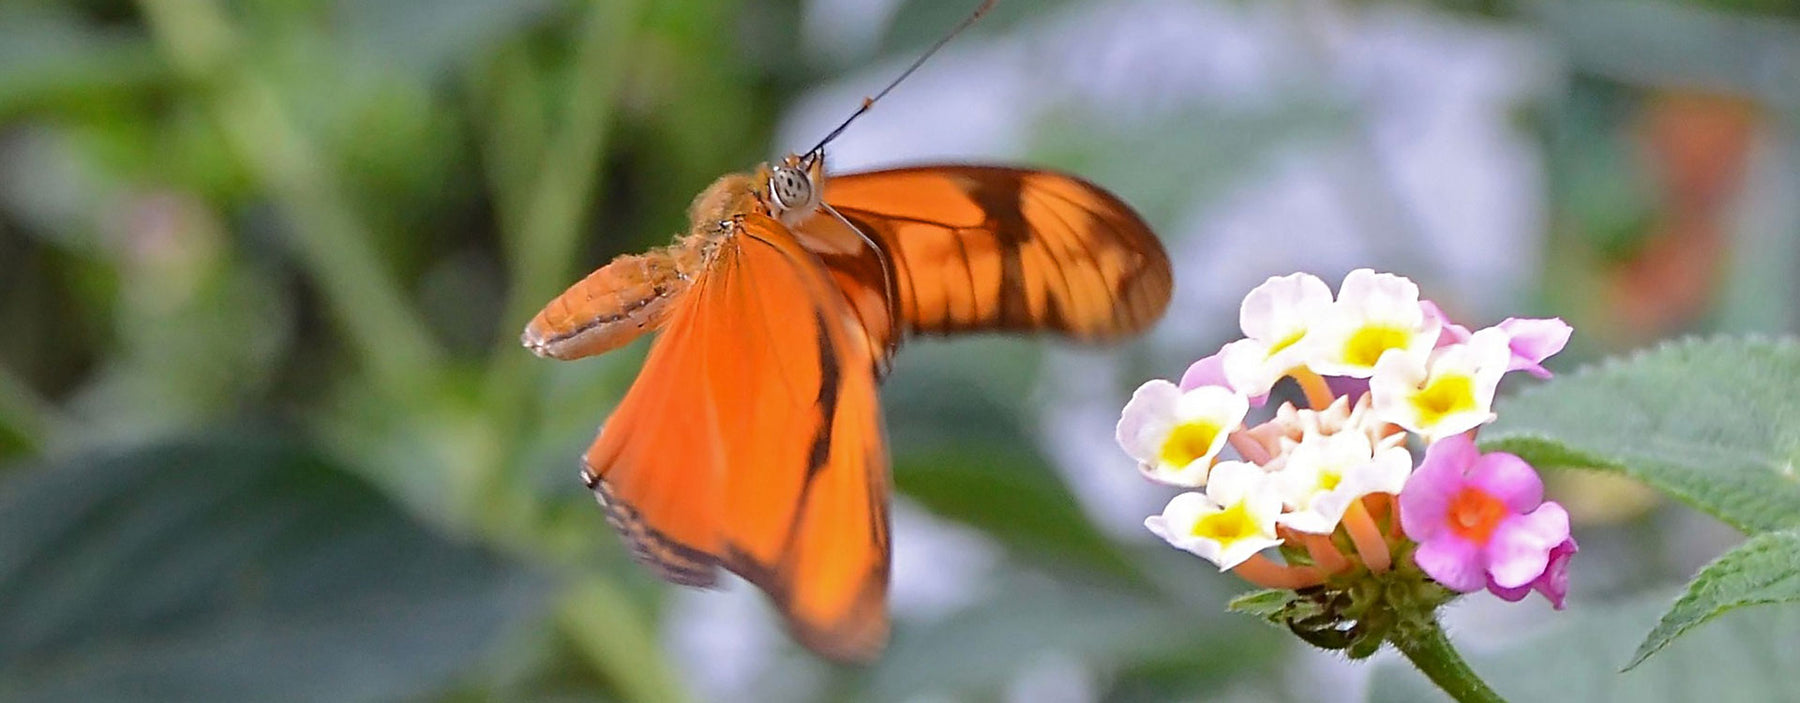 Butterfly flying towards a flower